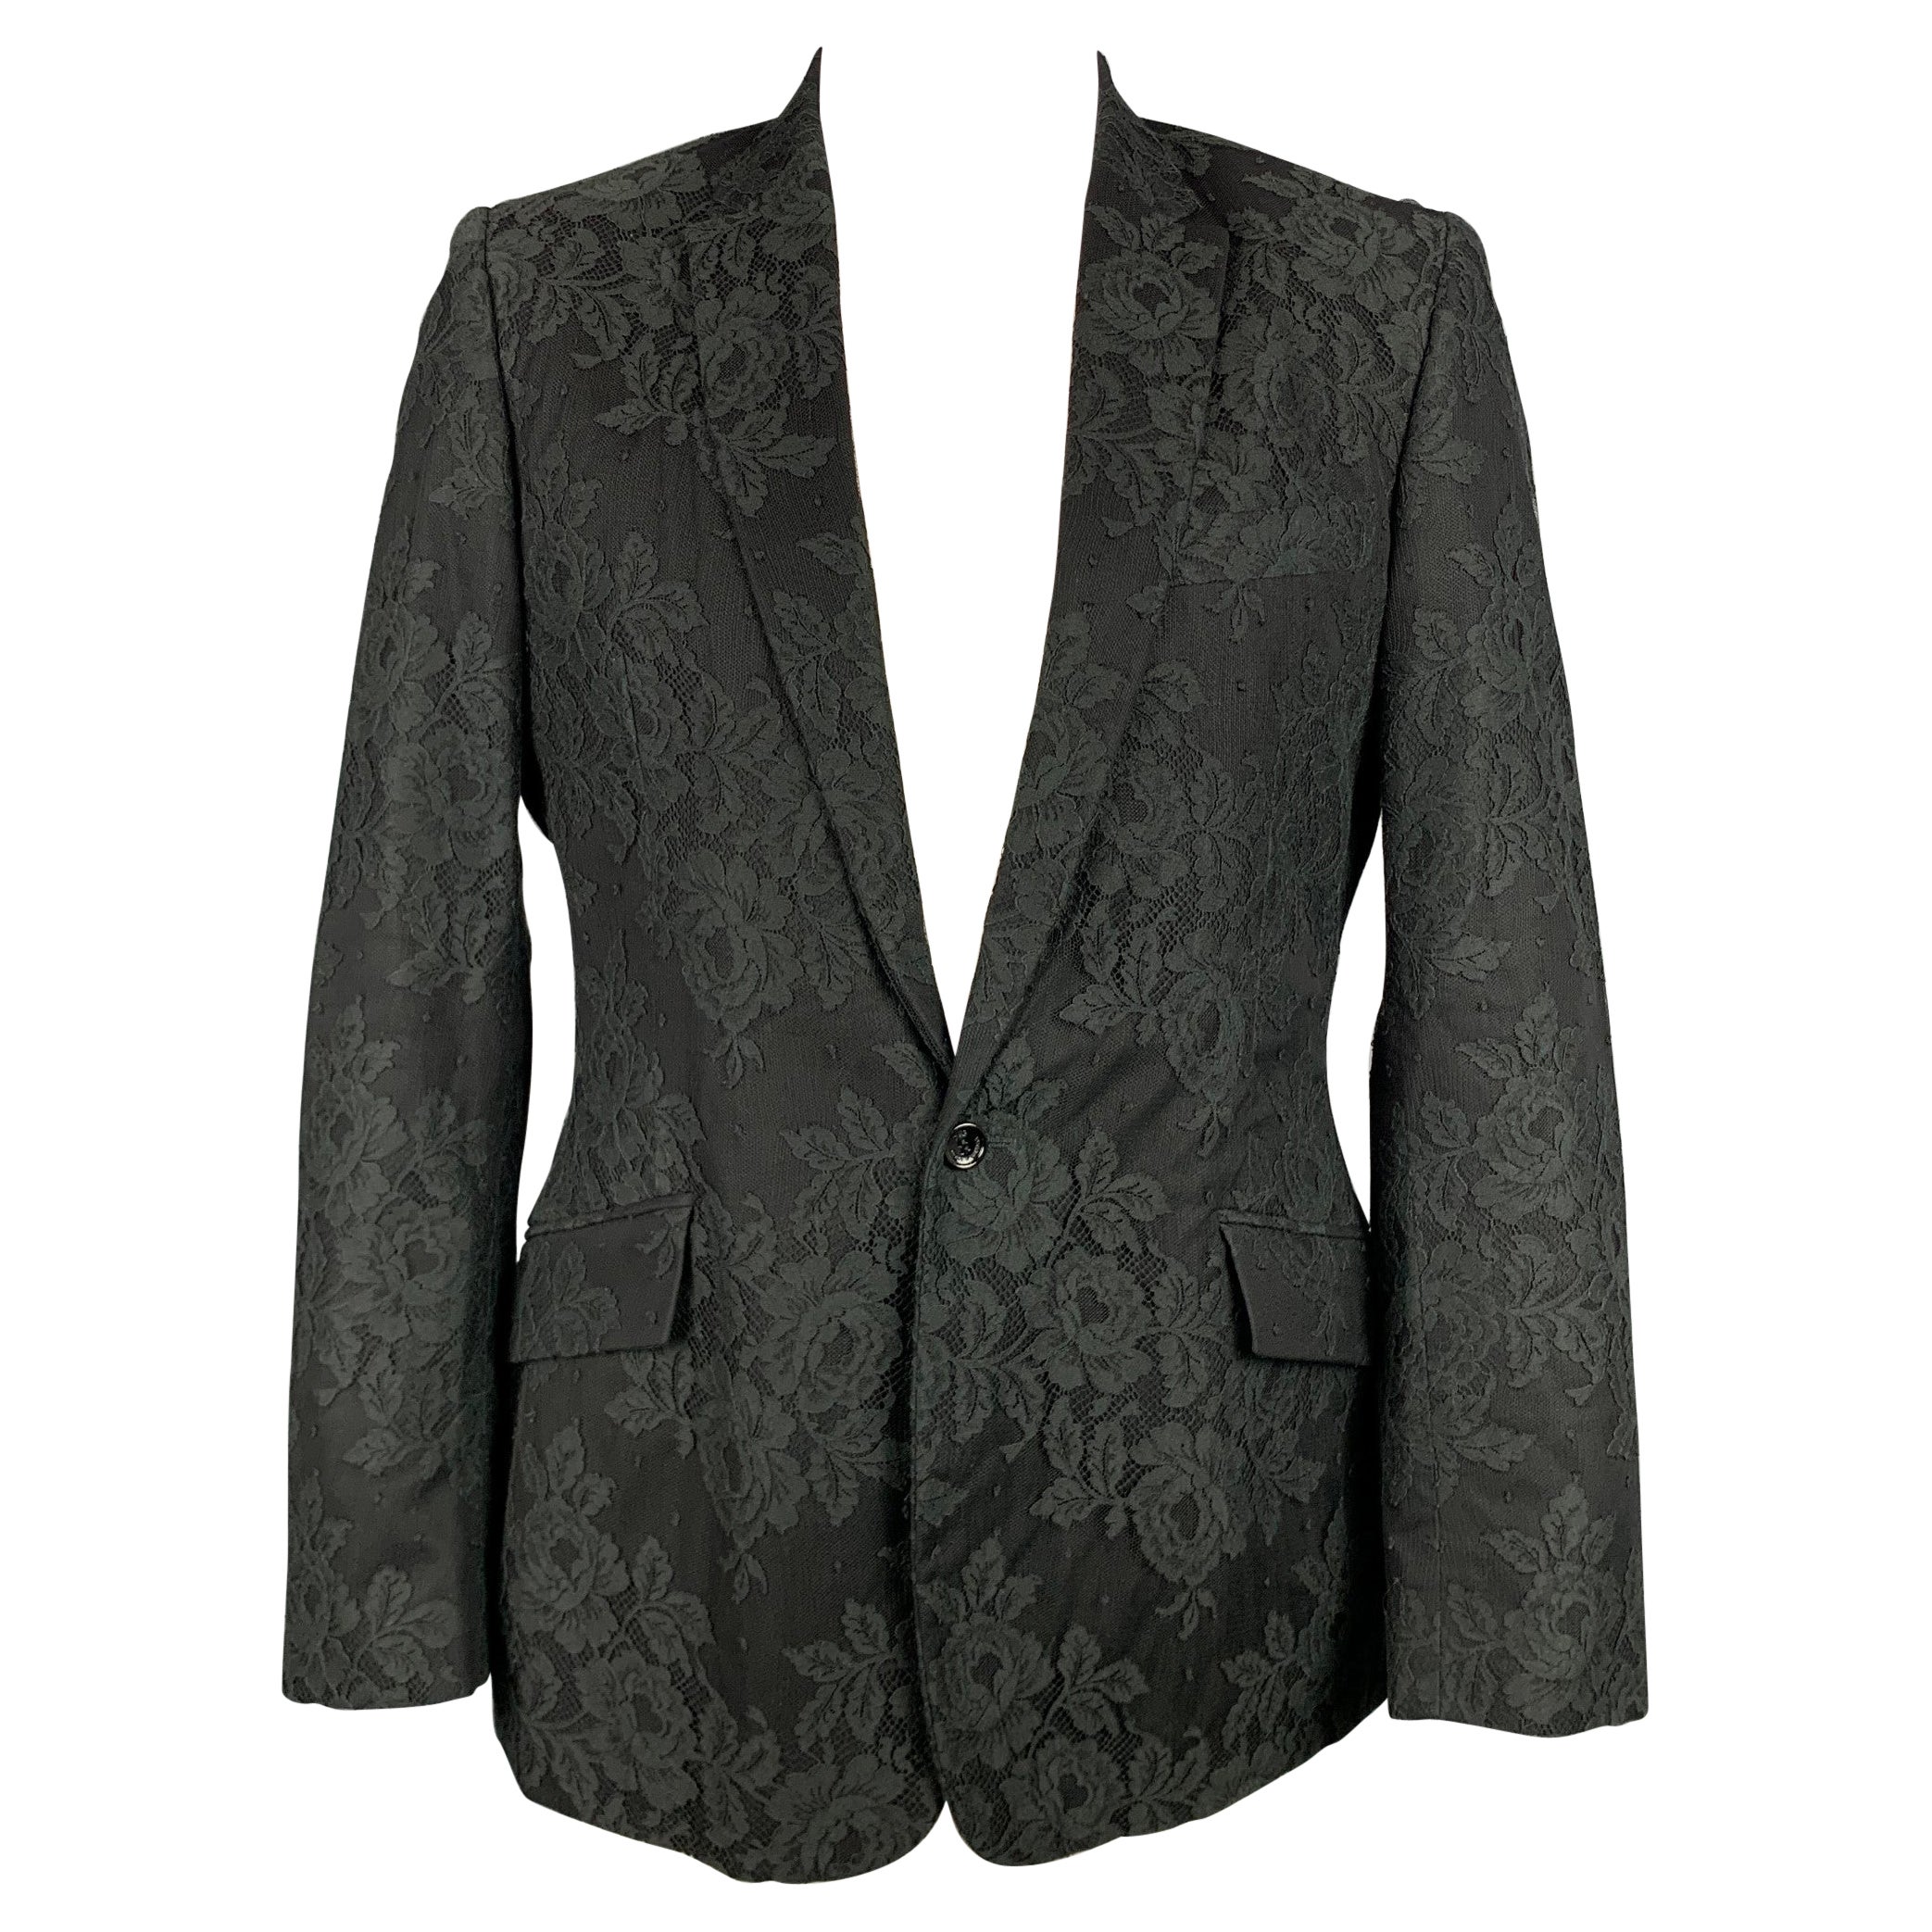 D&G by DOLCE & GABBANA Size 44 Black Lace Notch Lapel Sport Coat